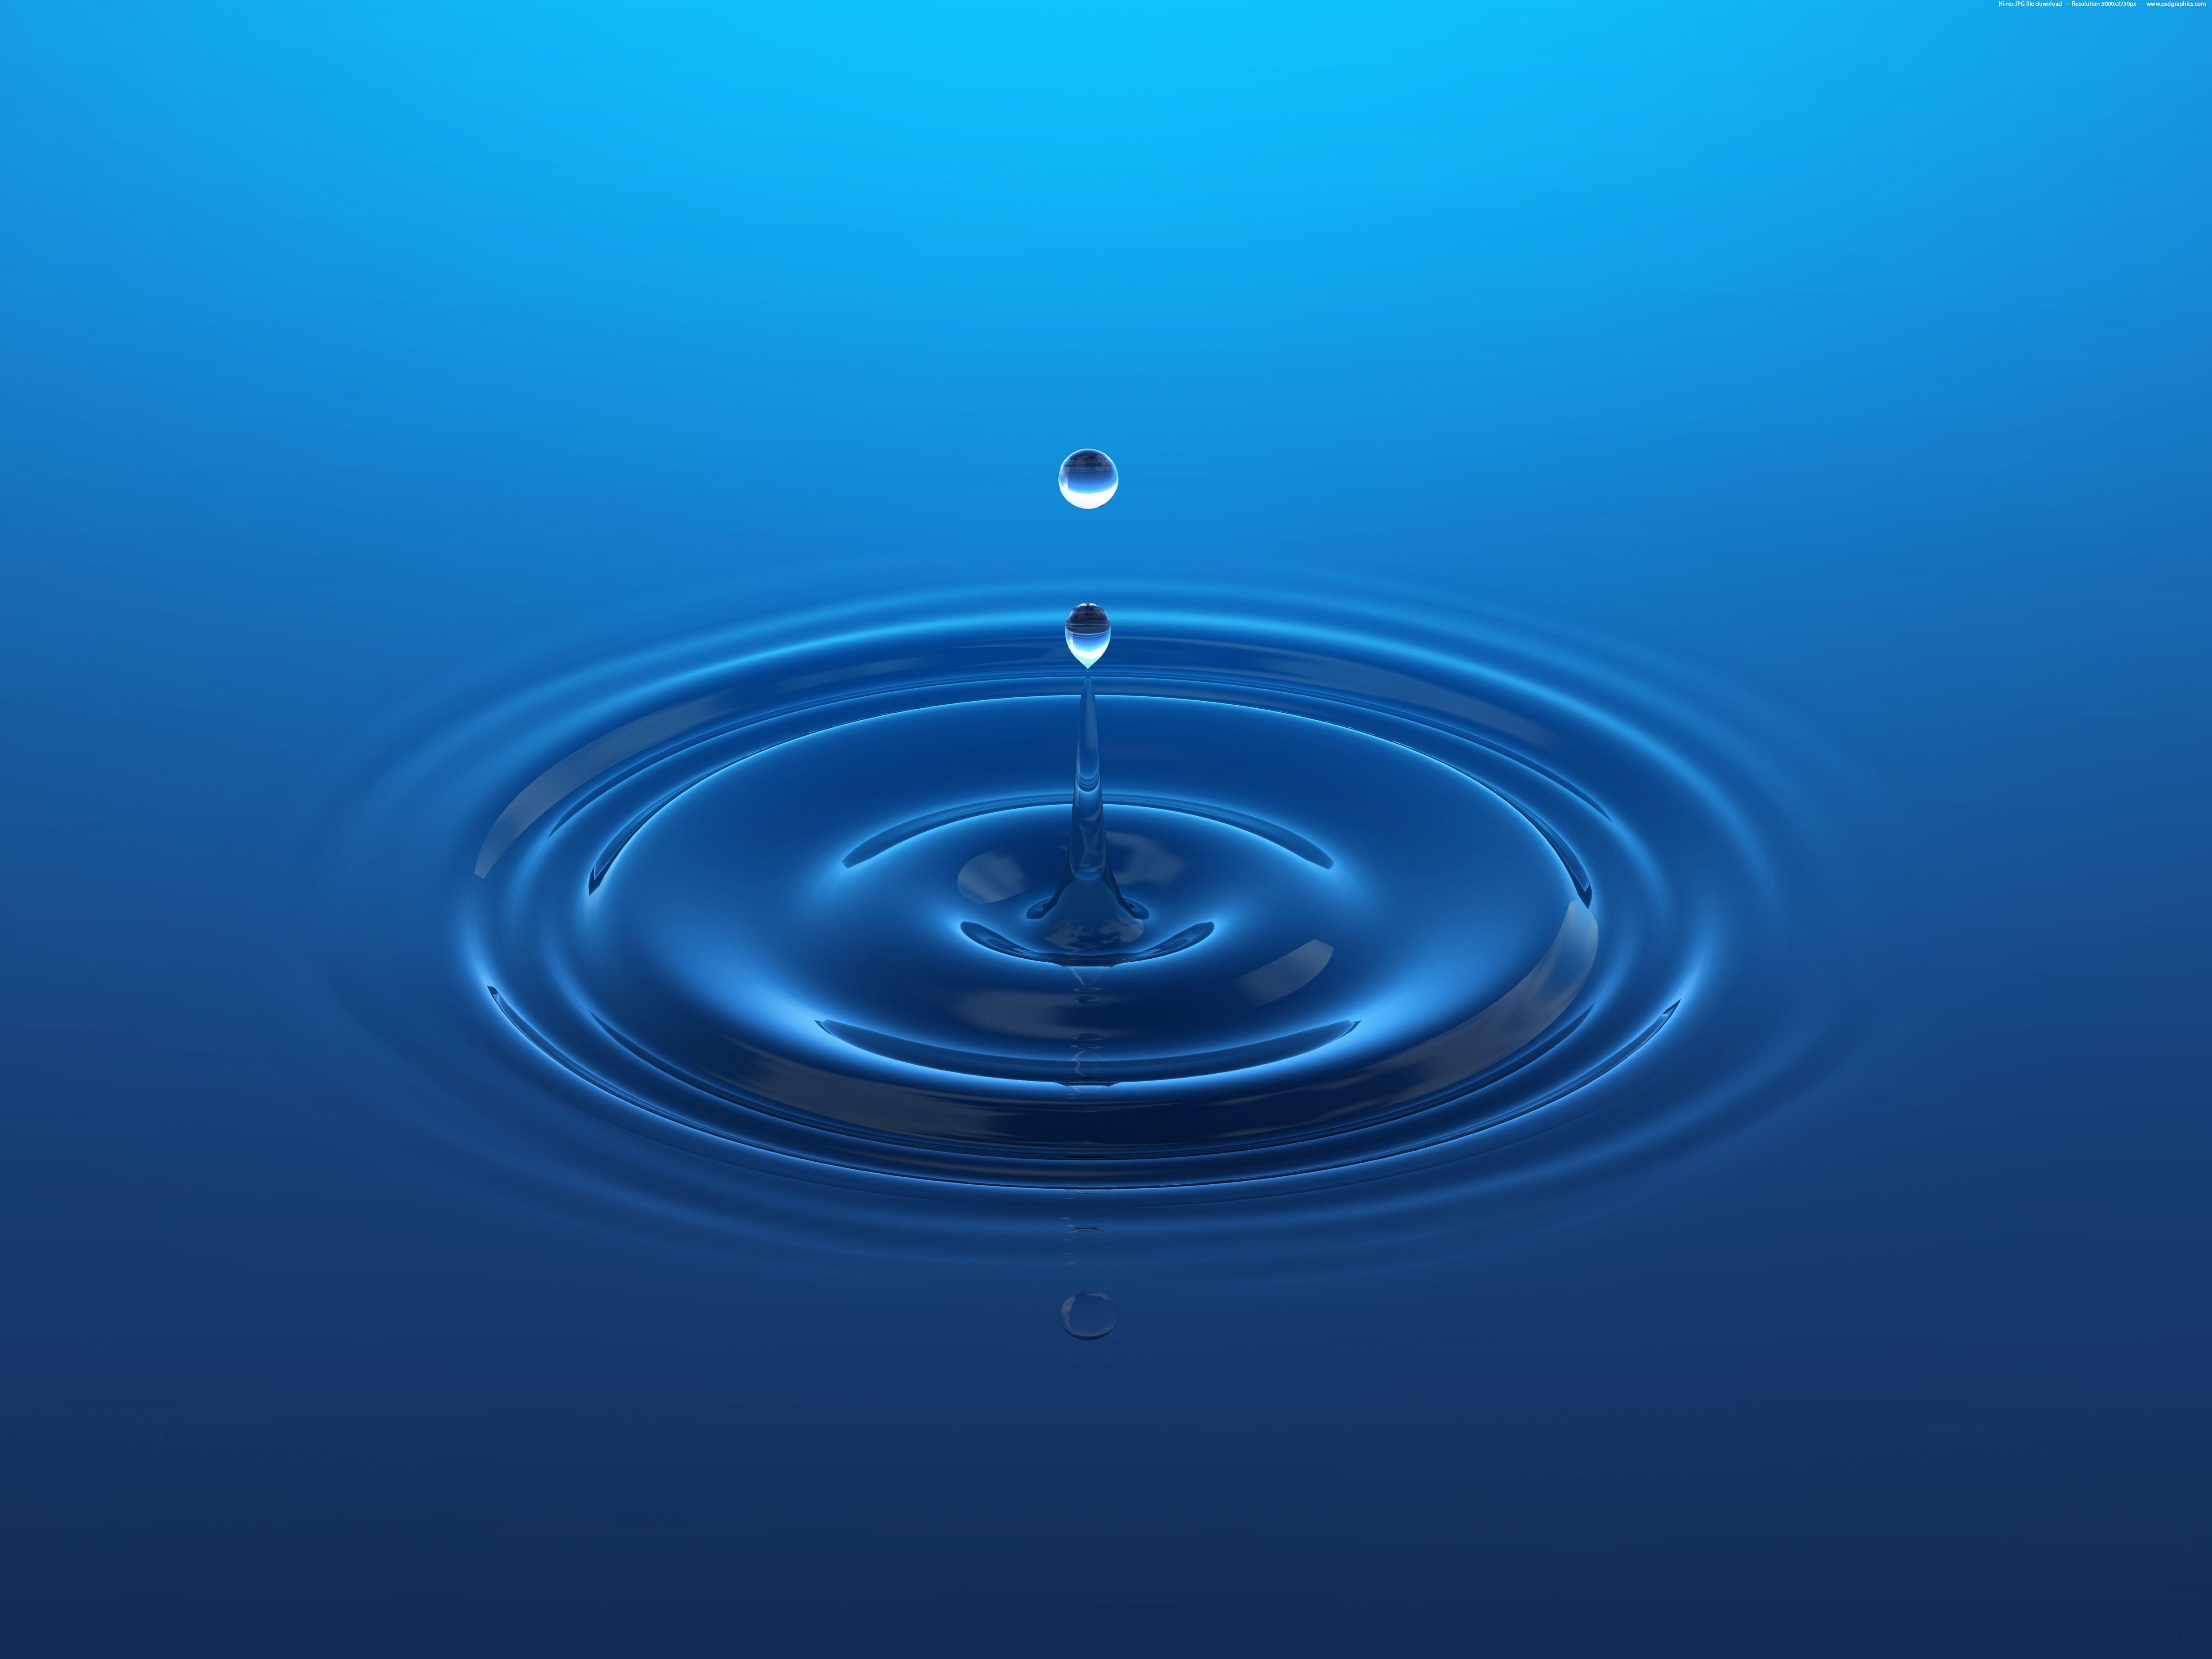 Earth Water Drop wallpaper (Desktop, Phone, Tablet)